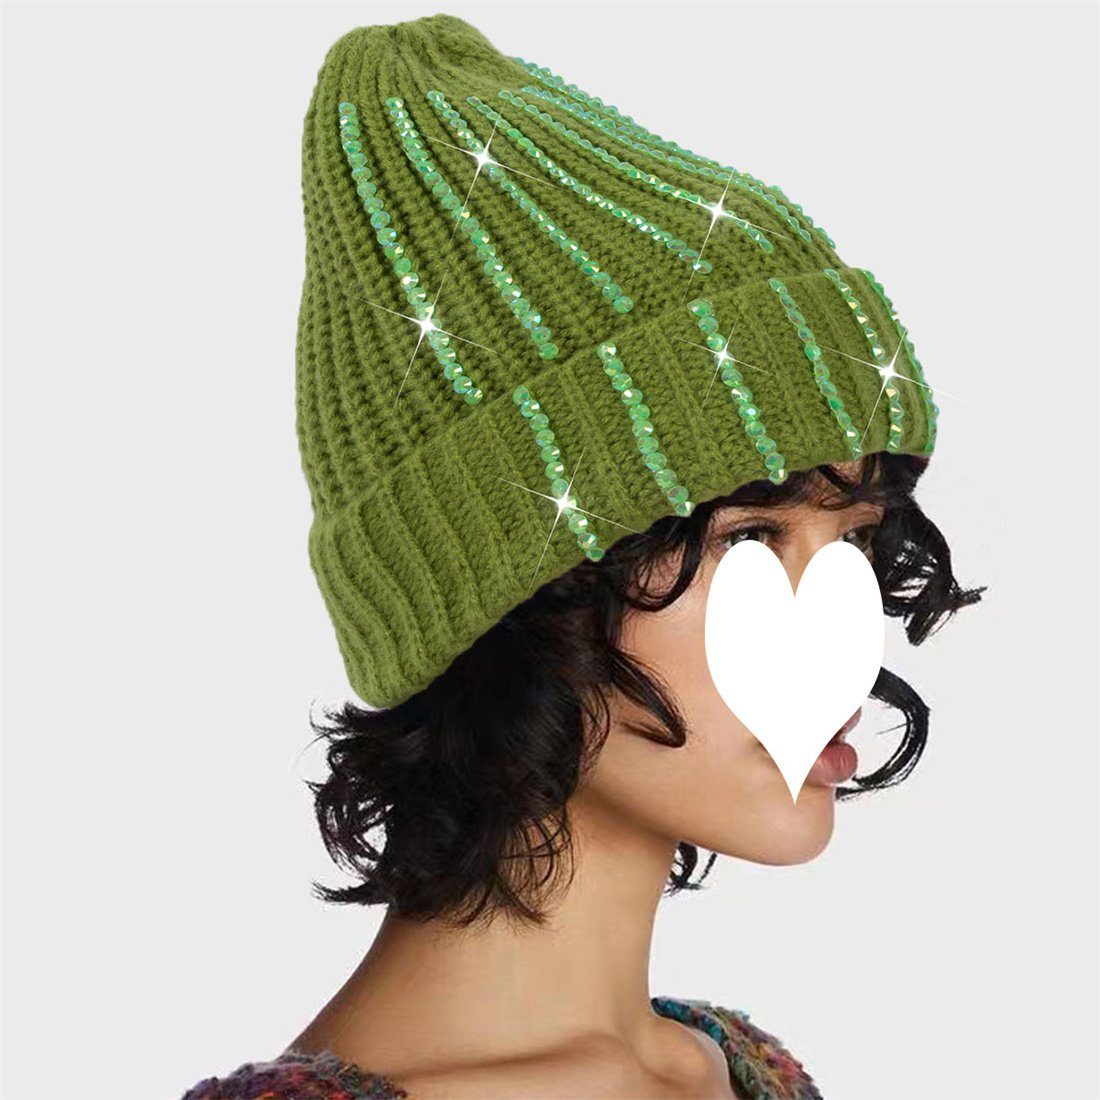 DÖRÖY Strickmütze Damen Outdoor-Mode warme Strickmütze, Winter verdickt warme Wollmütze grün